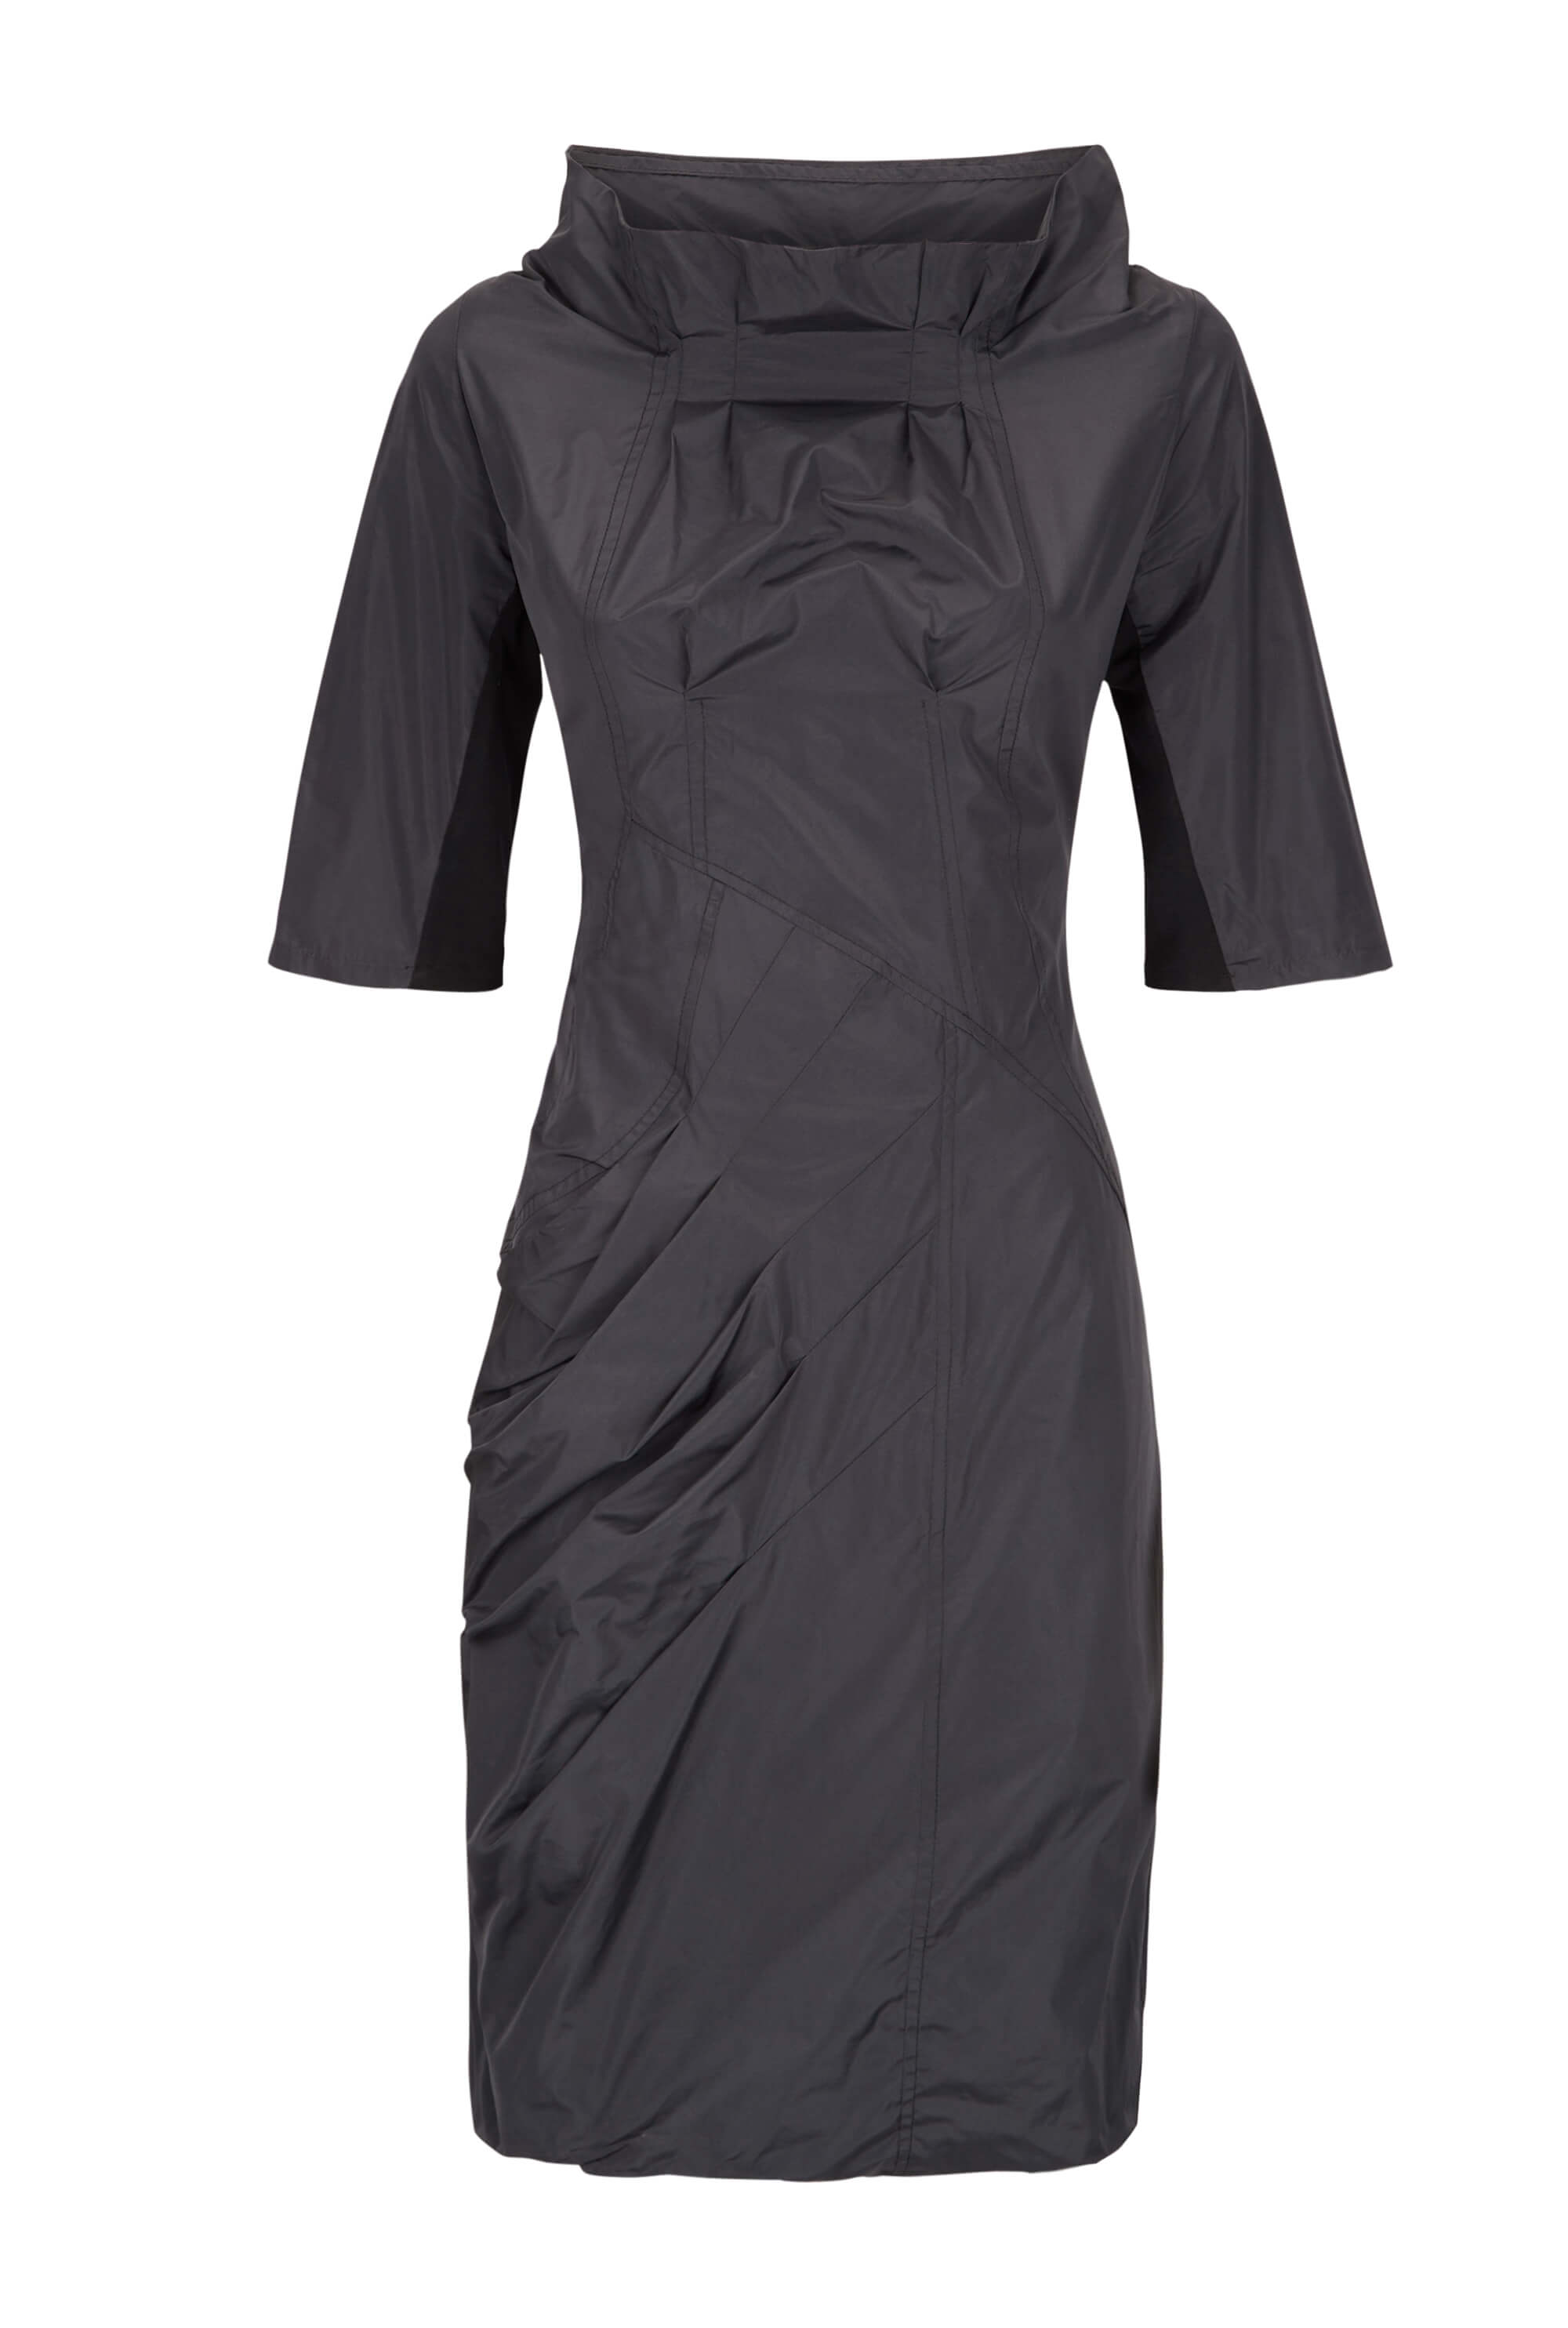 James Lakeland Women's Taffeta Dress - Grey In Gray